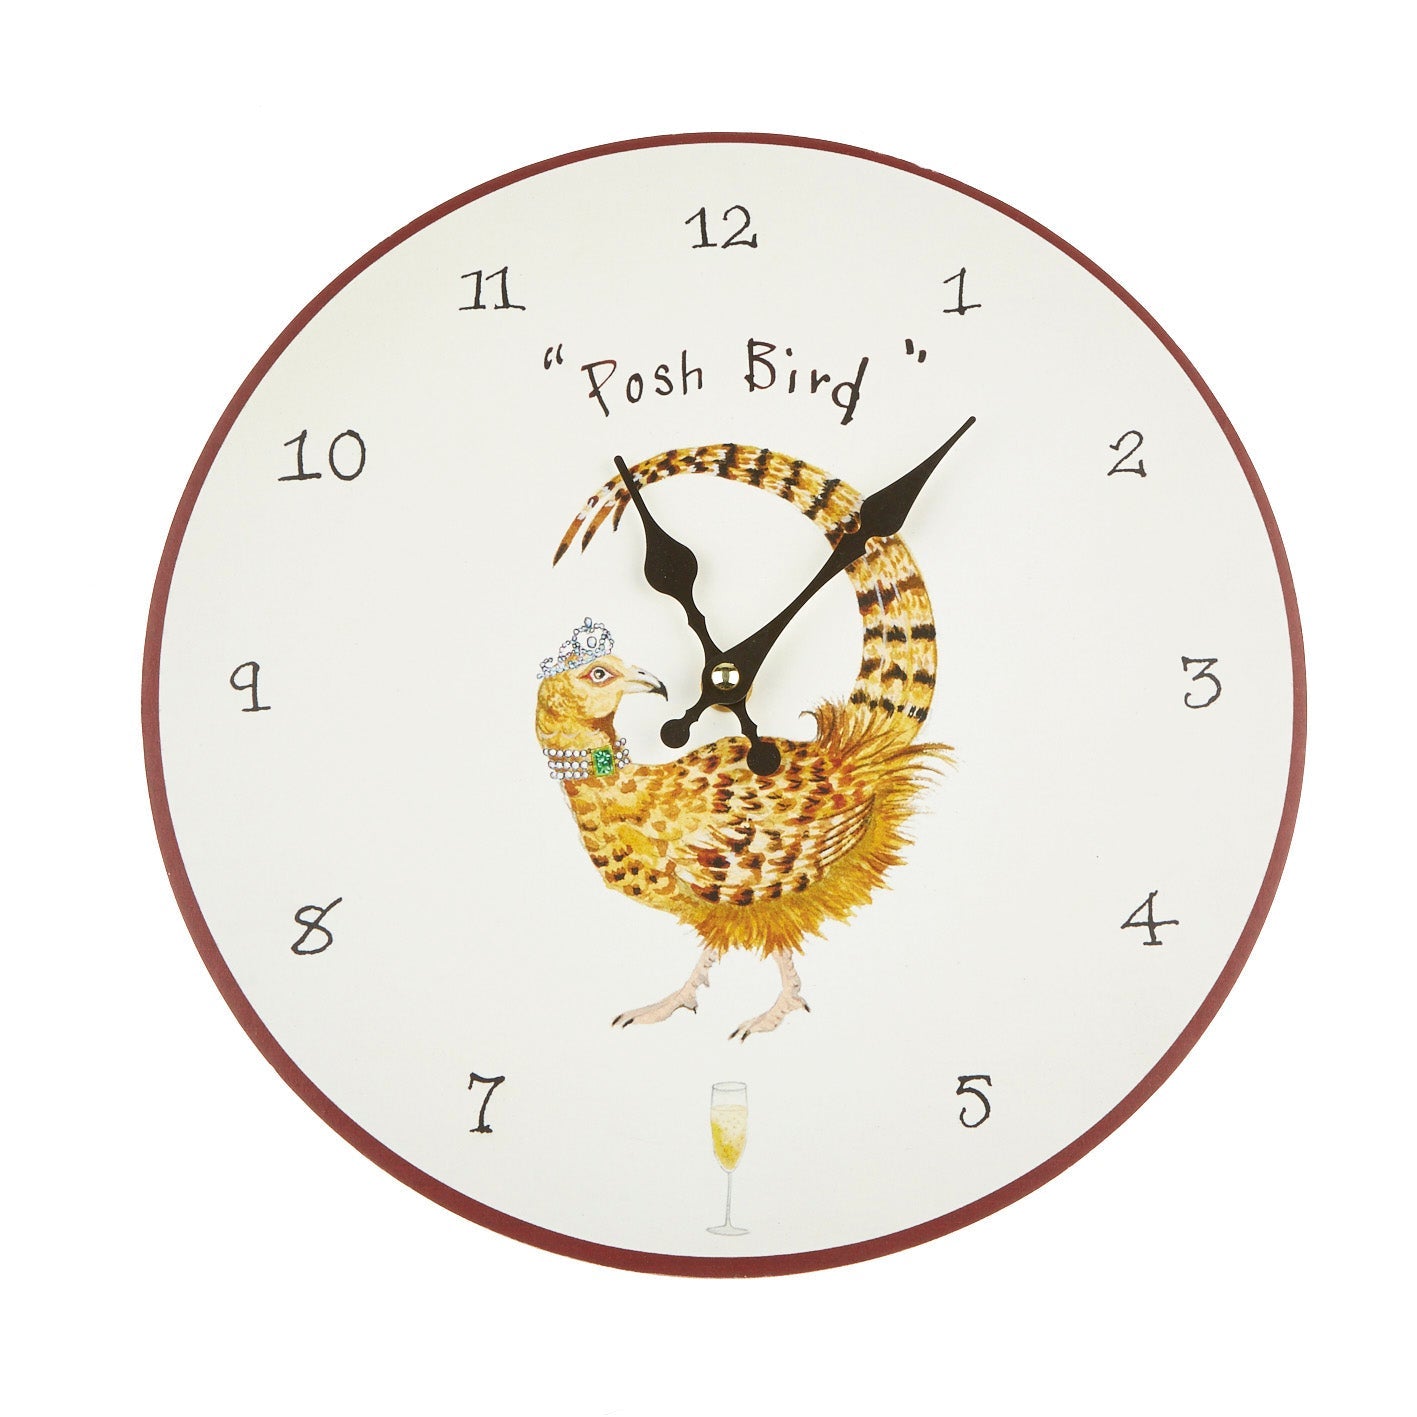 2nd "Posh Bird" Wall Clock